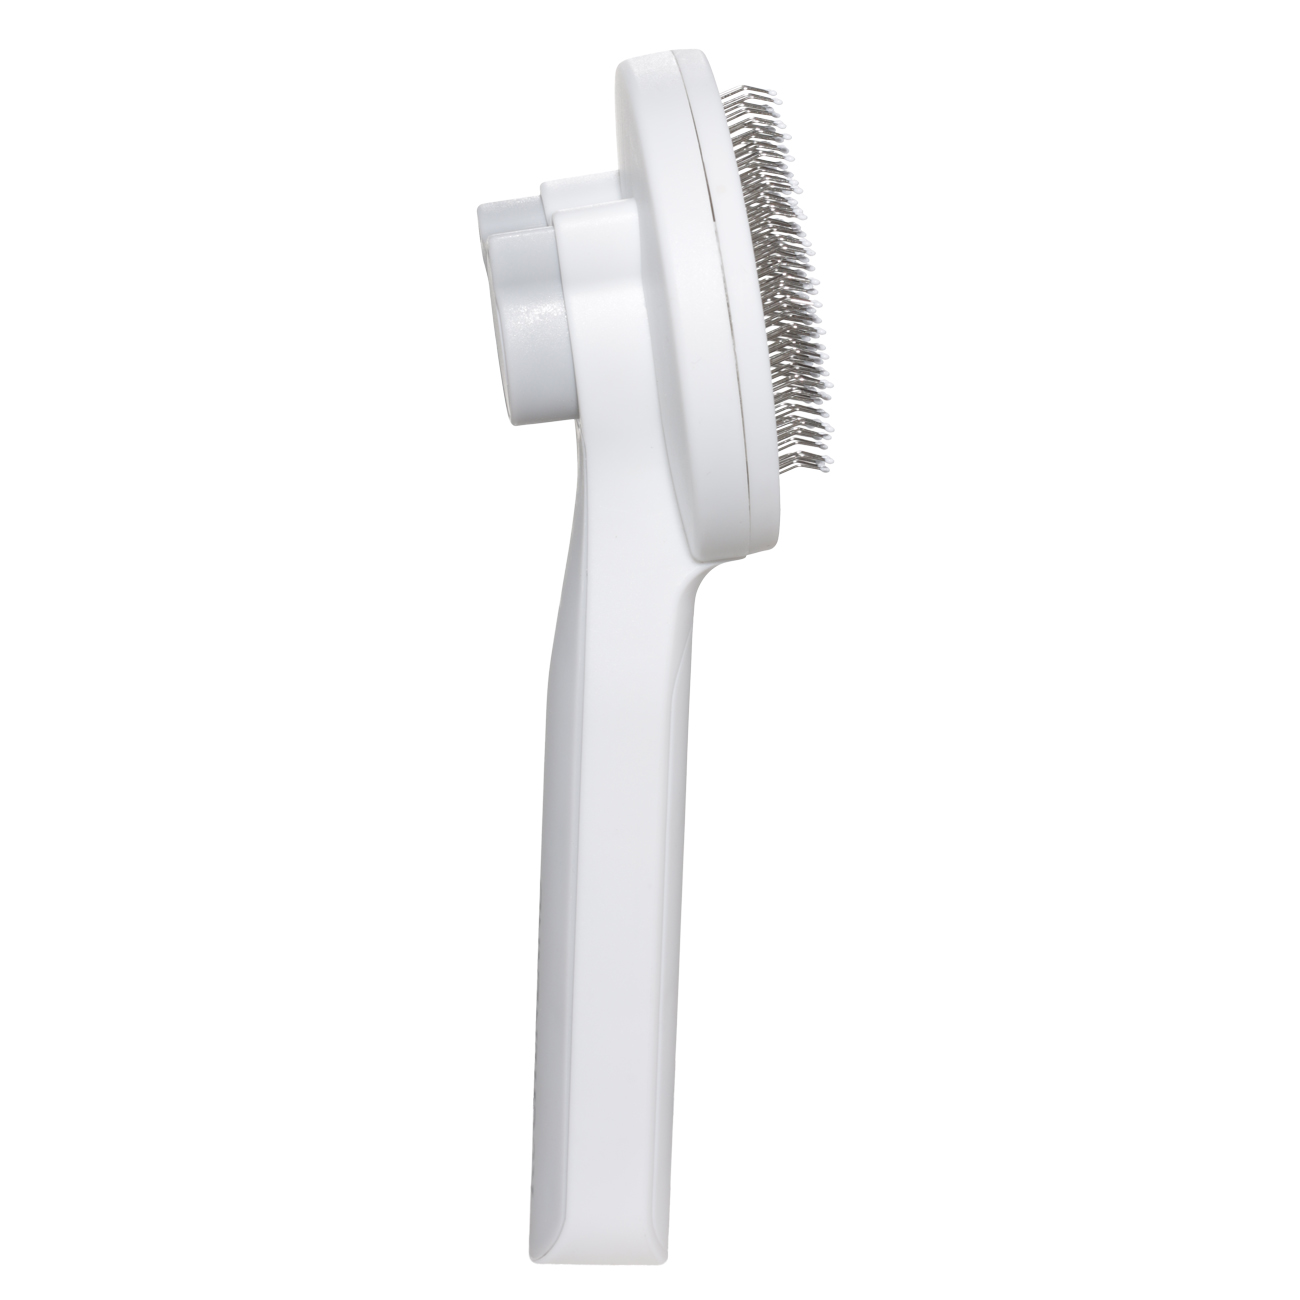 Pet hair comb, 18 cm, Self-cleaning, plastic / steel, White-gray, Ears, Pet изображение № 2